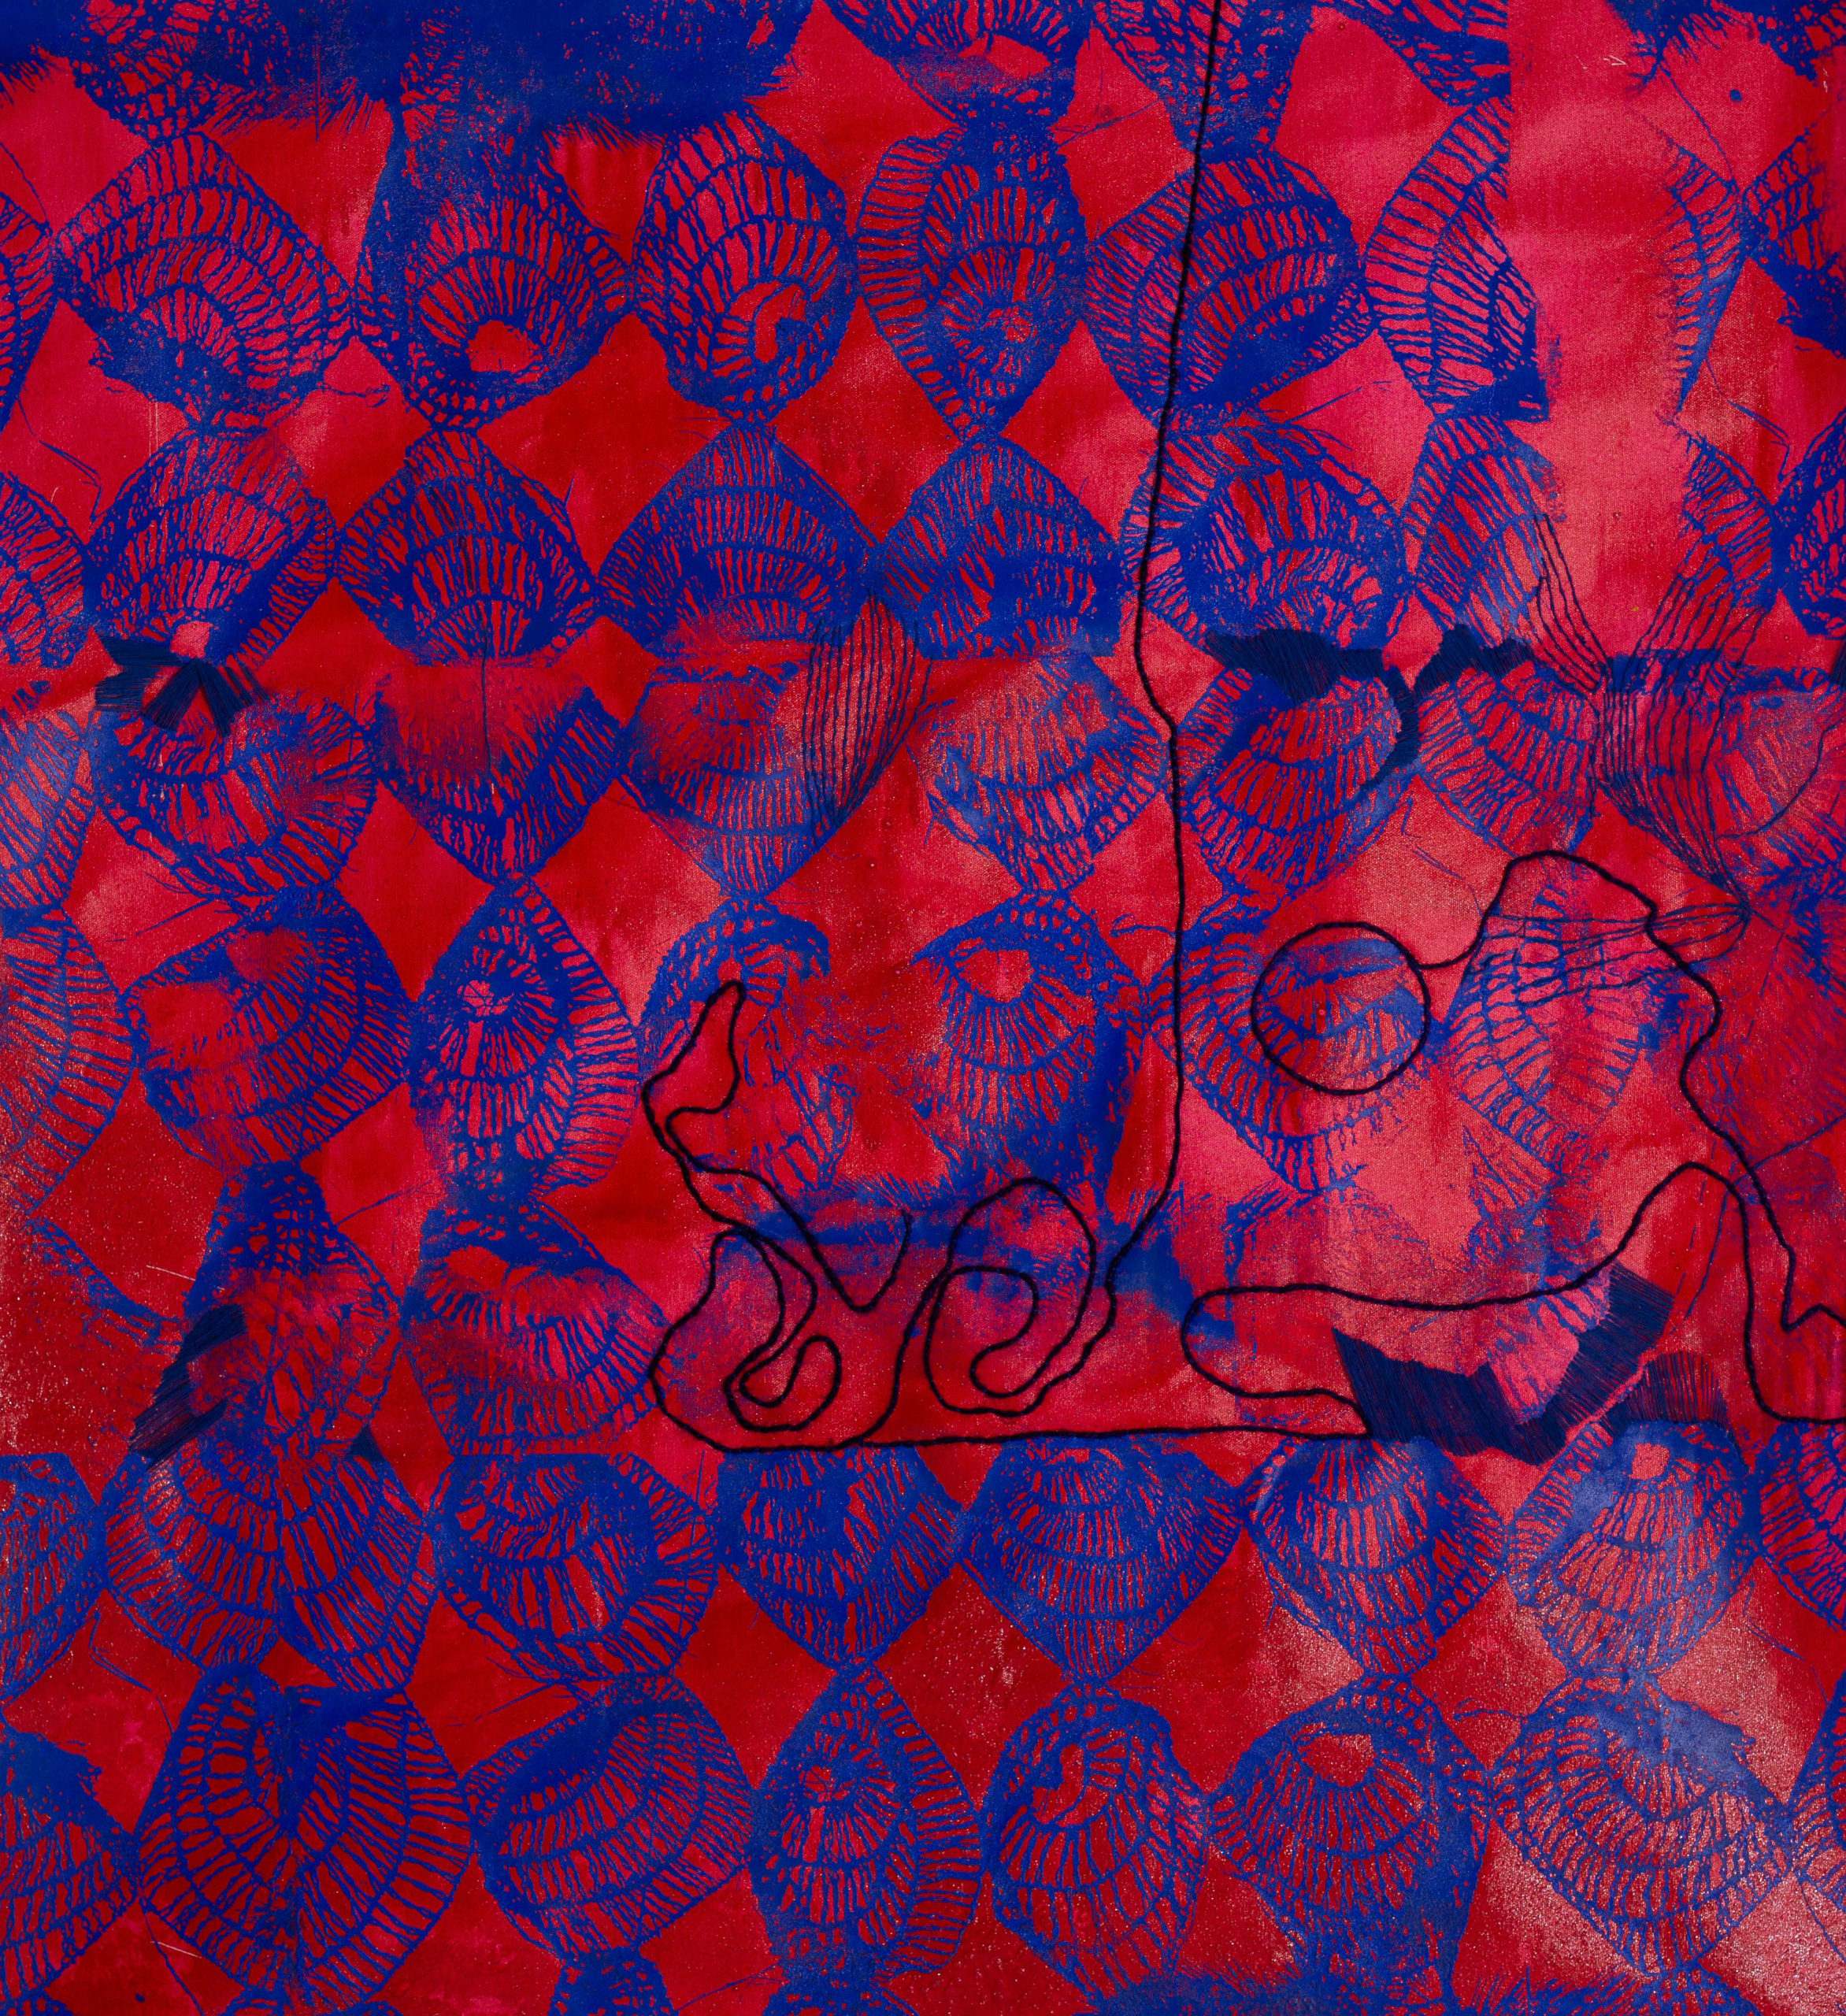 Ebusua Santen, 2022, Acrylic on canvas, thread, dyed jute rope and plastisol, 88.9 cm X 106.68 cm.